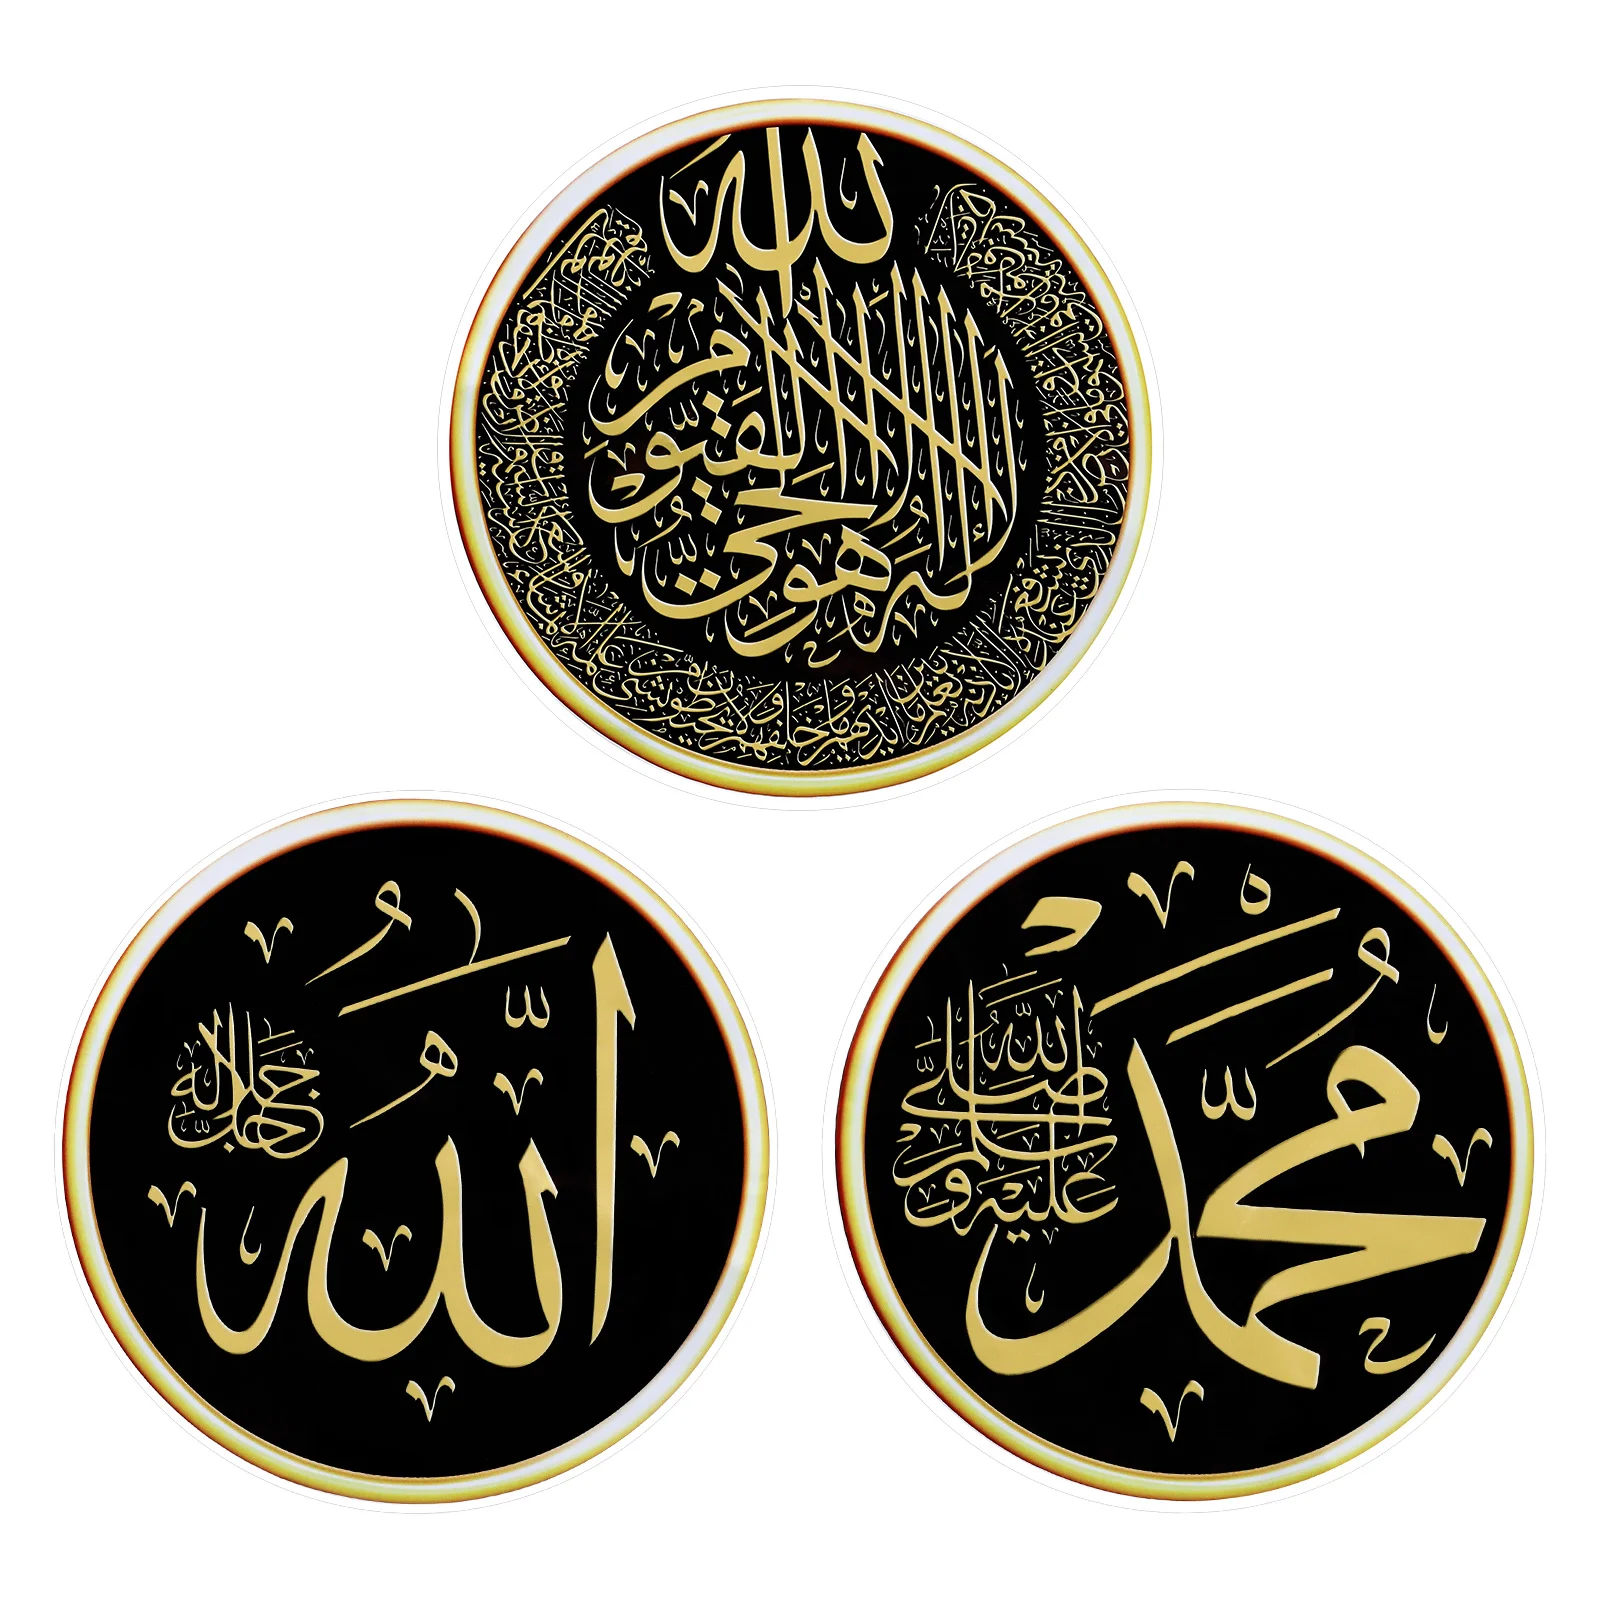 

Wall Ramadan Muslim Decal Decor Islamic Stickers Decorations Sticker Eid Mubarak Home Culture Decals Removable Decoration Gifts